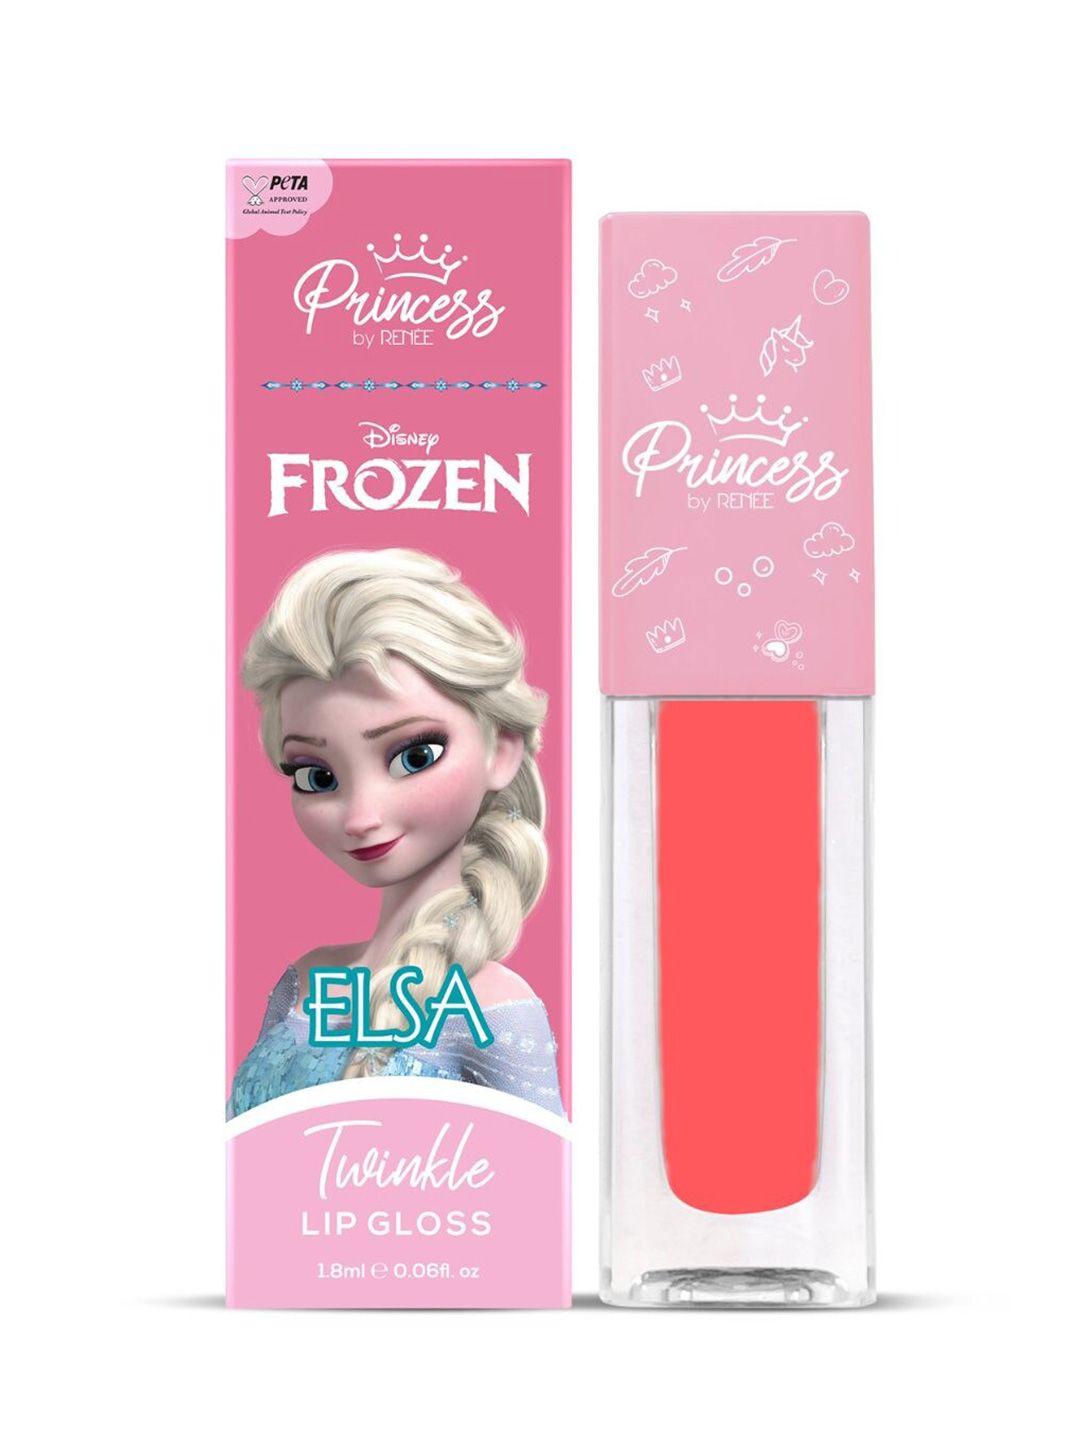 renee princess disney frozen twinkle lip gloss 1.8ml - elsa pink